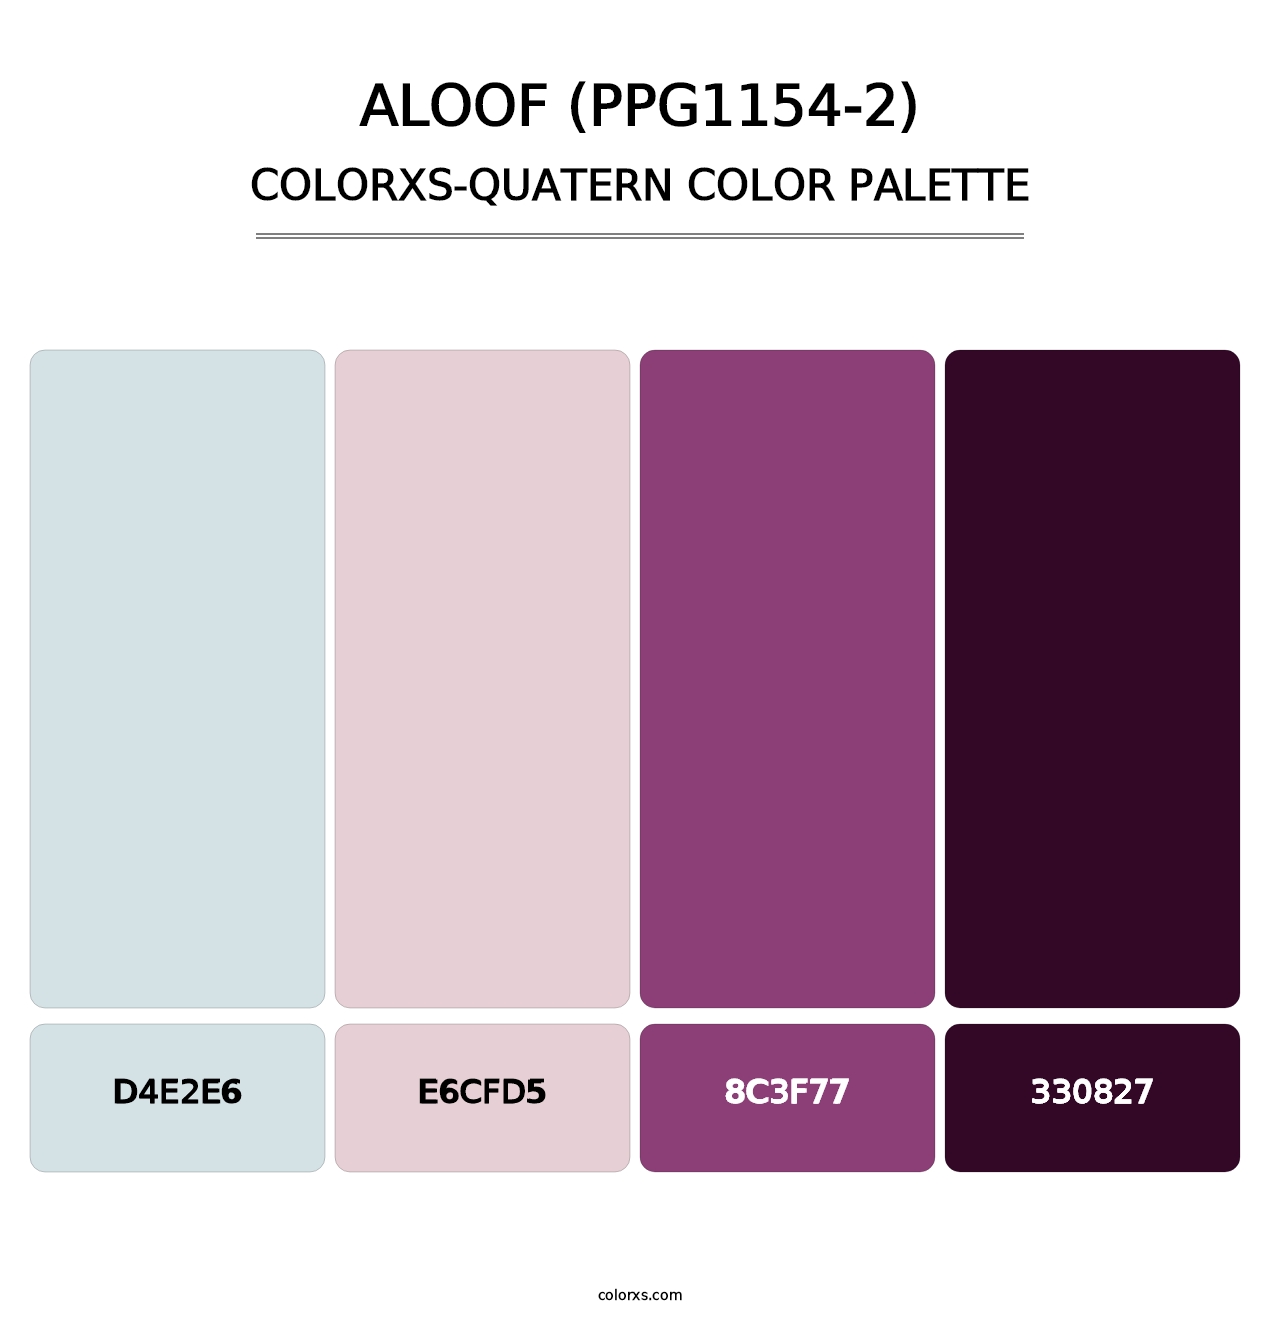 Aloof (PPG1154-2) - Colorxs Quatern Palette